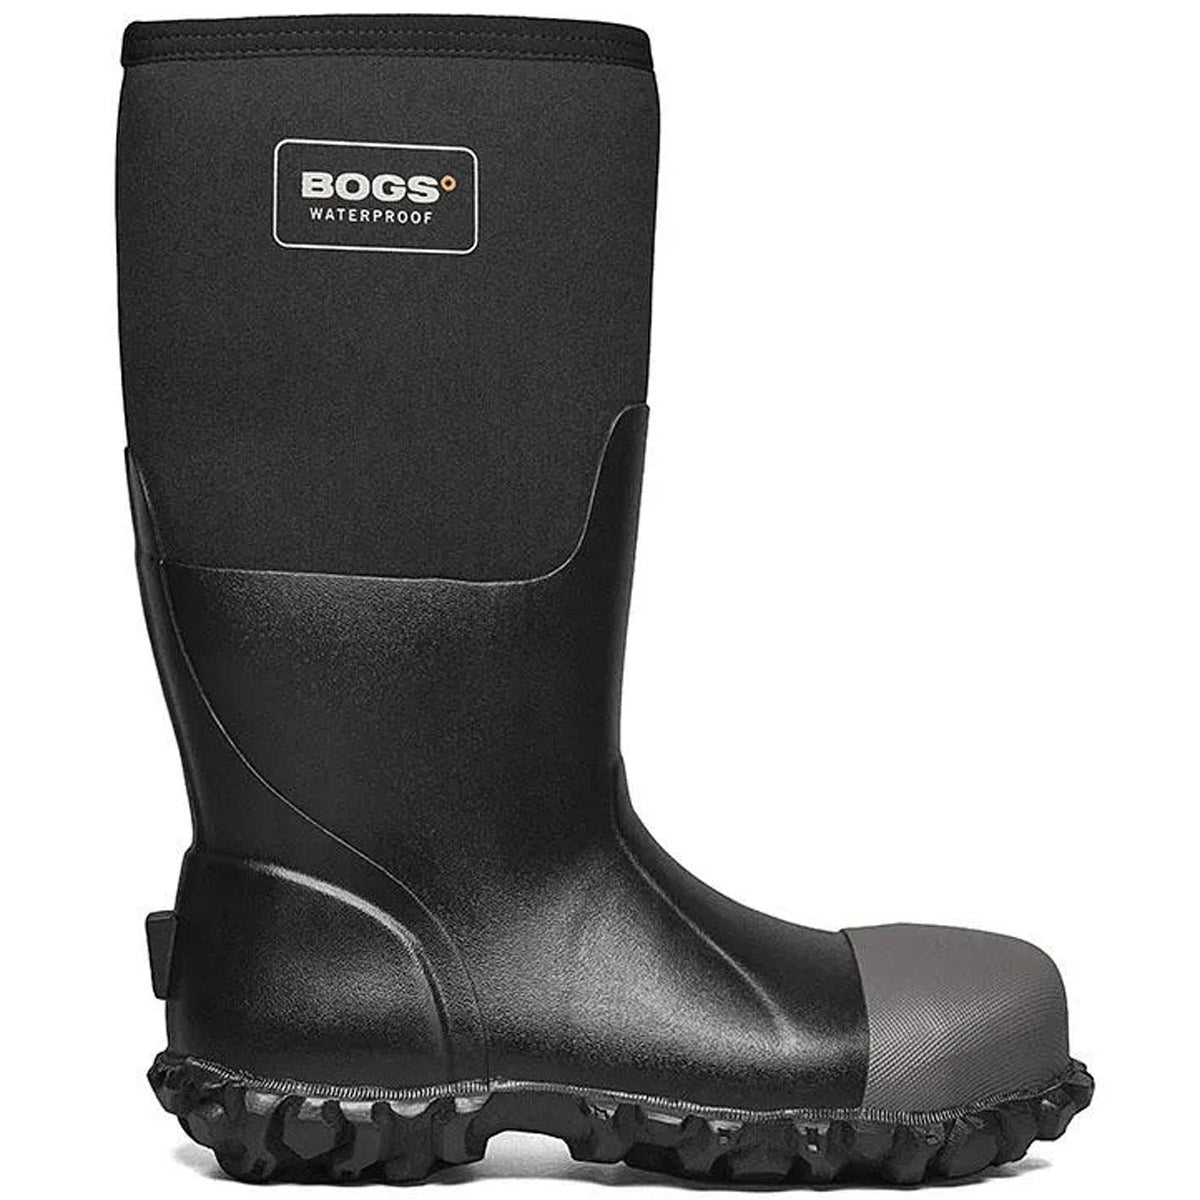 Black waterproof boot by BOGS STEEL TOE MESA - MENS with neoprene upper, steel toe protection, and sturdy treaded sole.